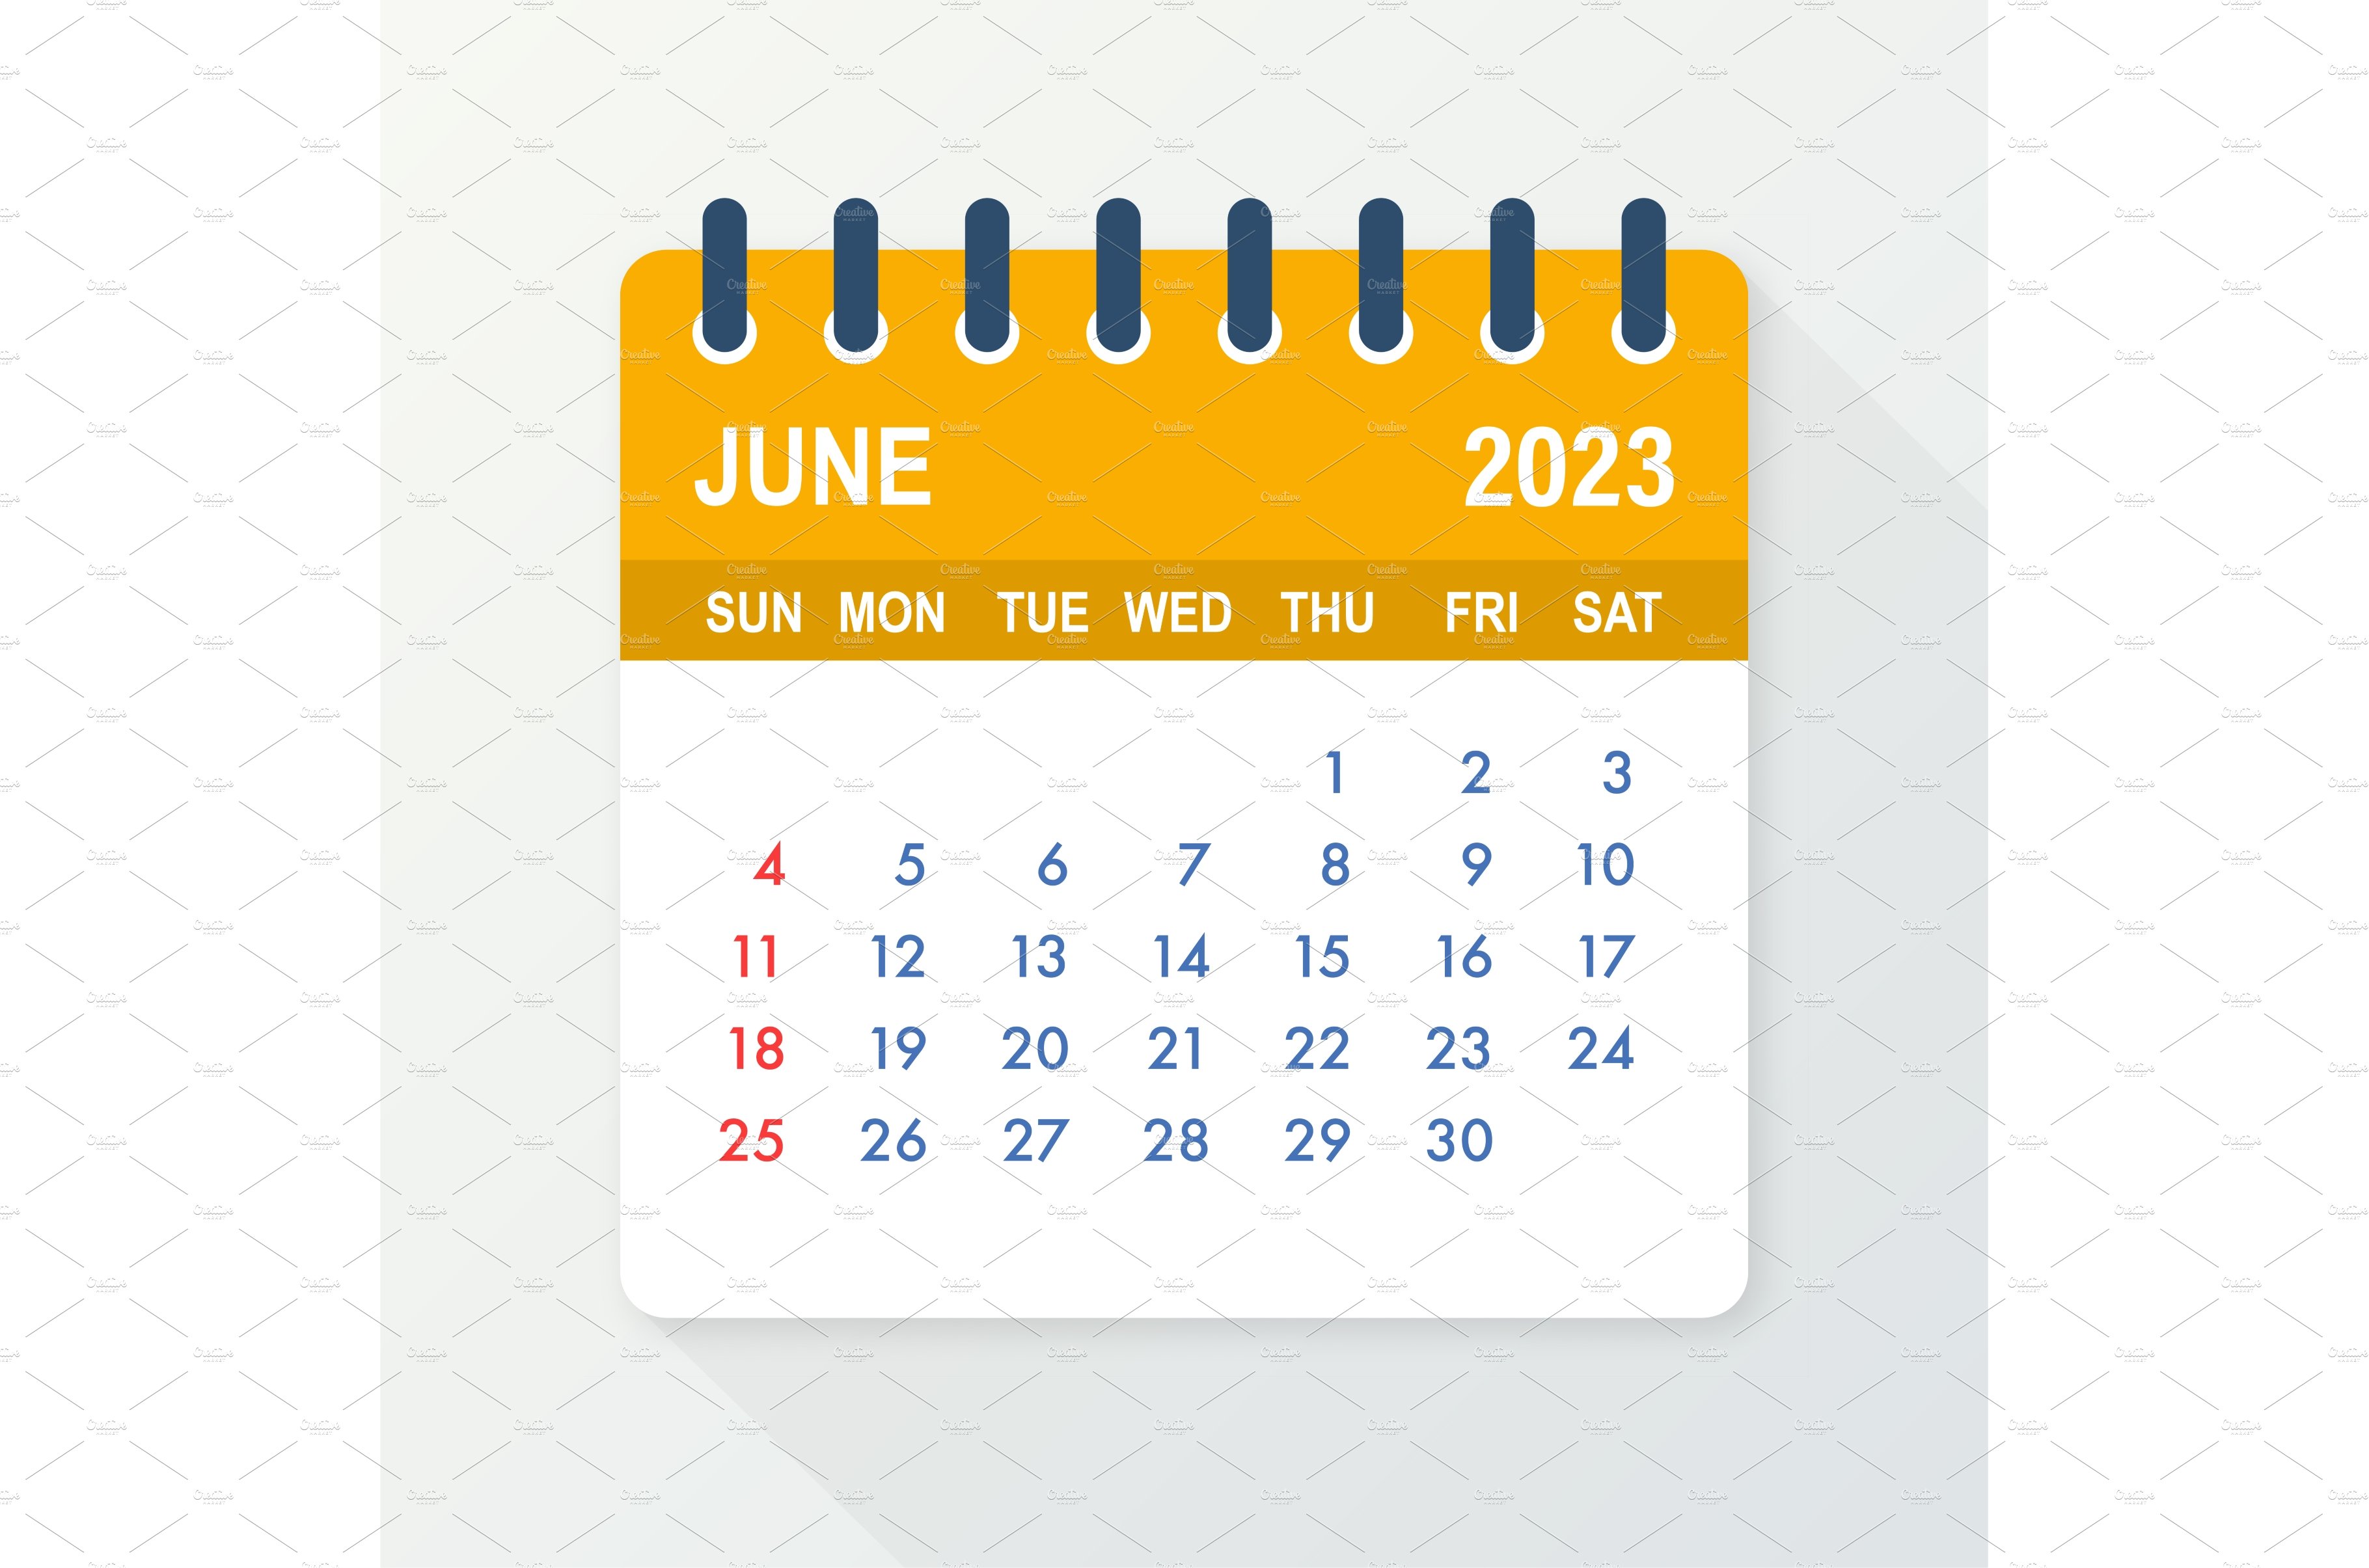 June 2023 Calendar Leaf. Calendar by DG on Dribbble